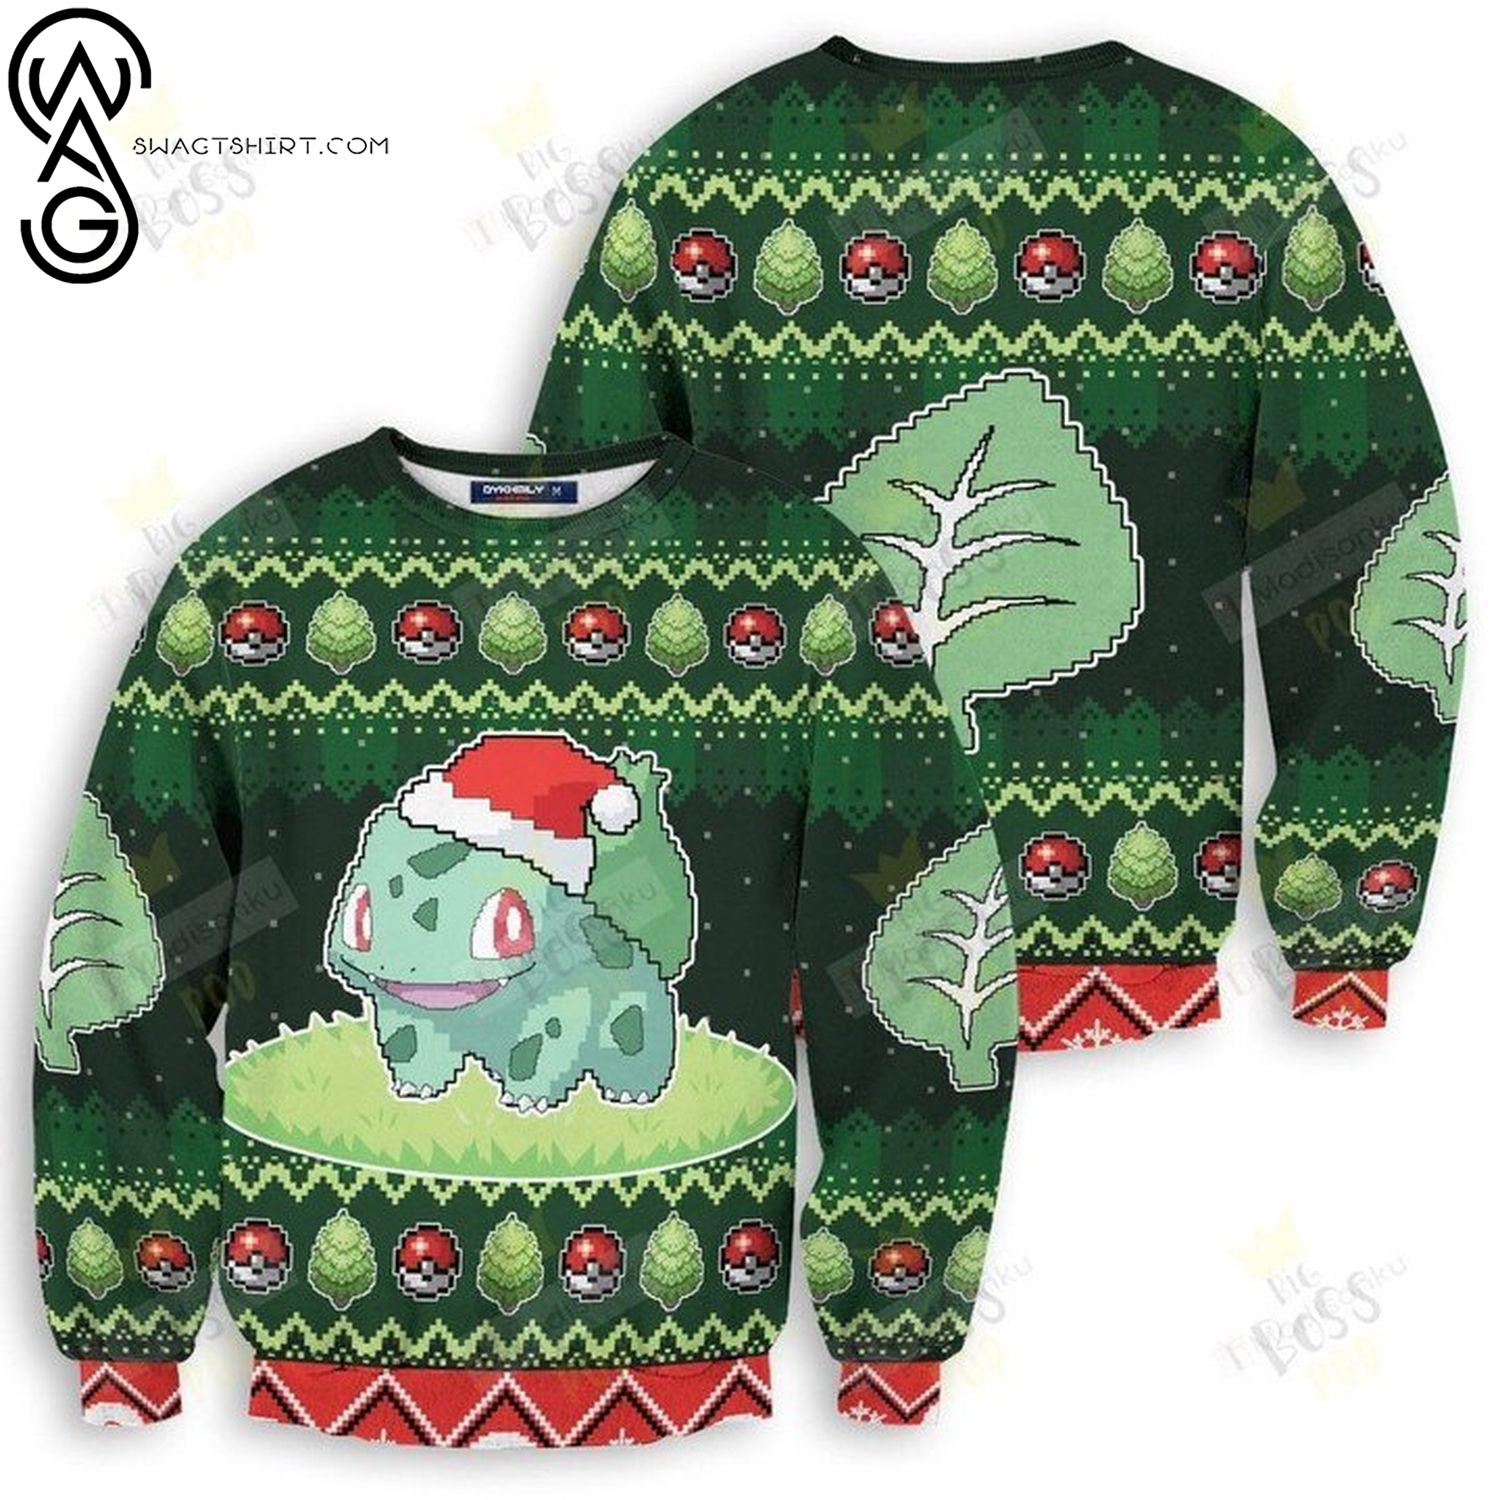 Bulbasaur pokemon full printing ugly christmas sweater